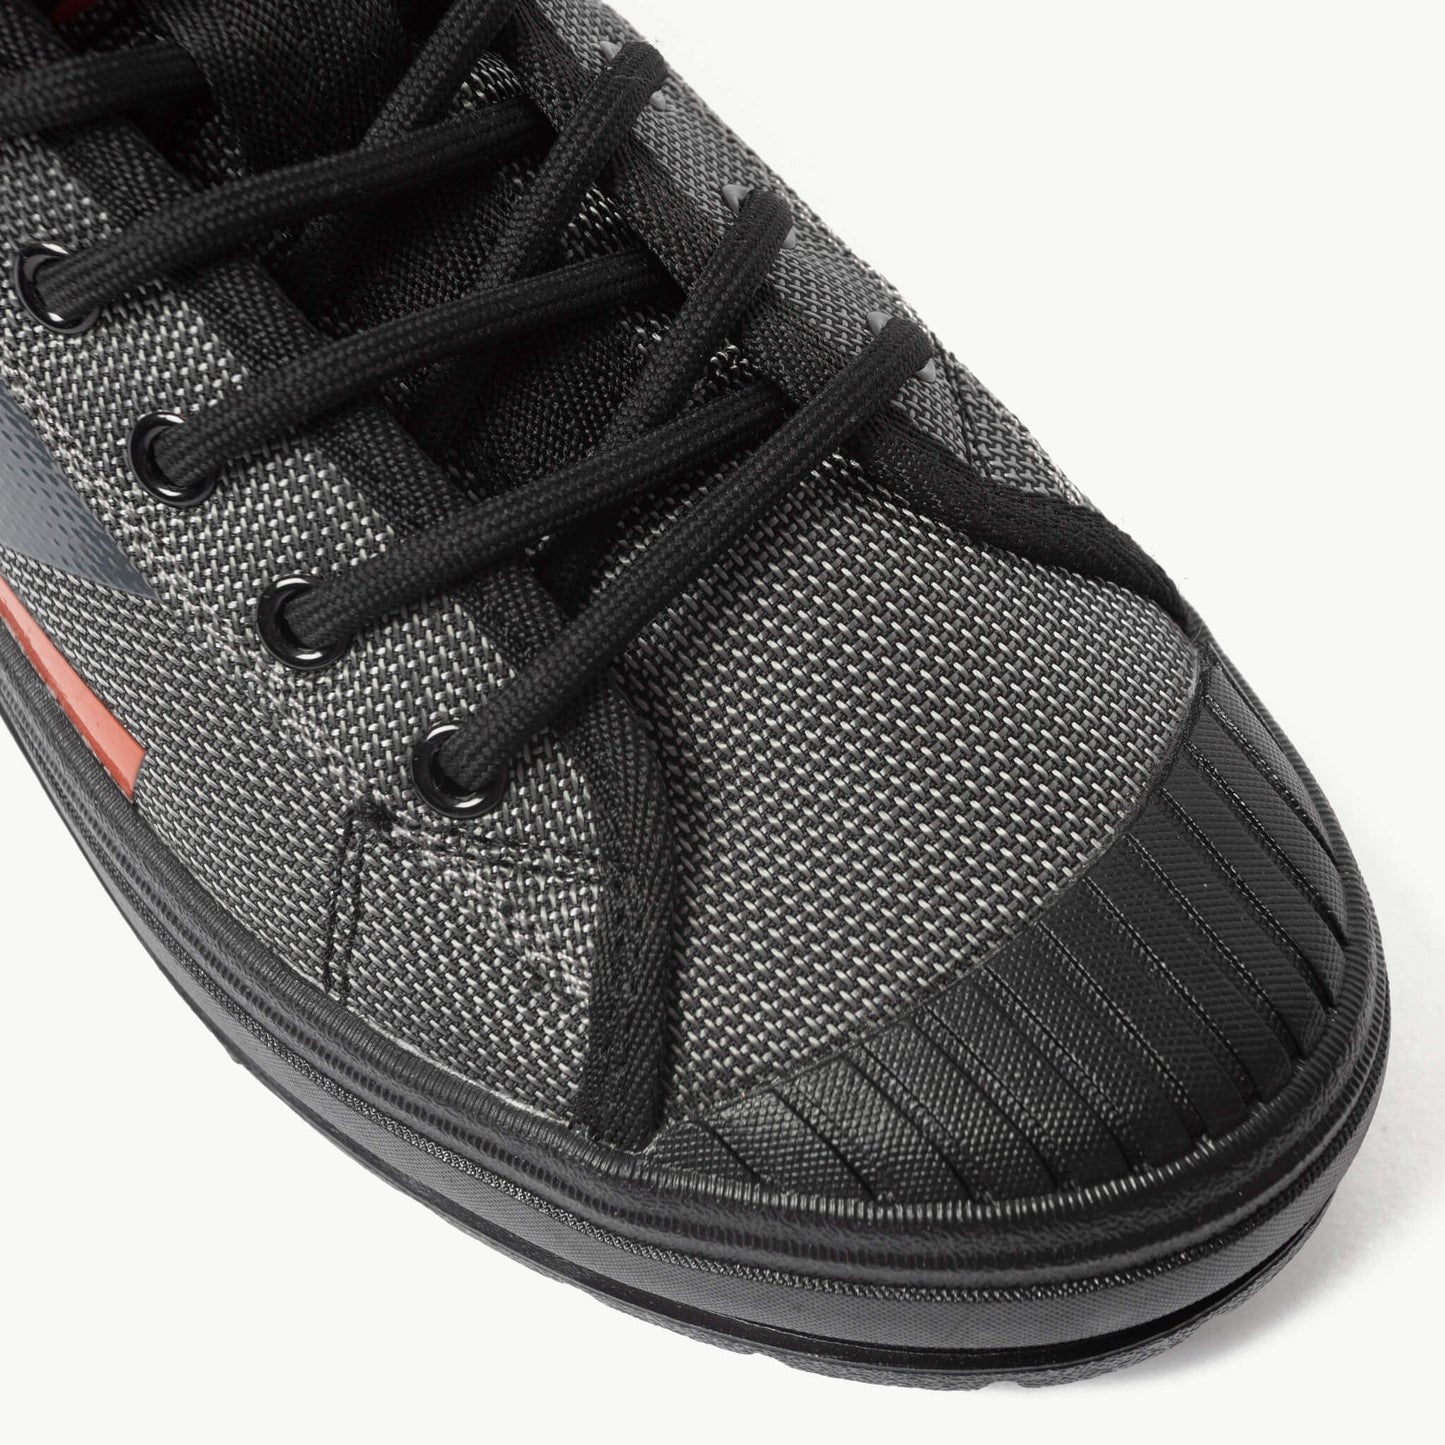 Surge Infrared Hi Sneakers  - Light Grey